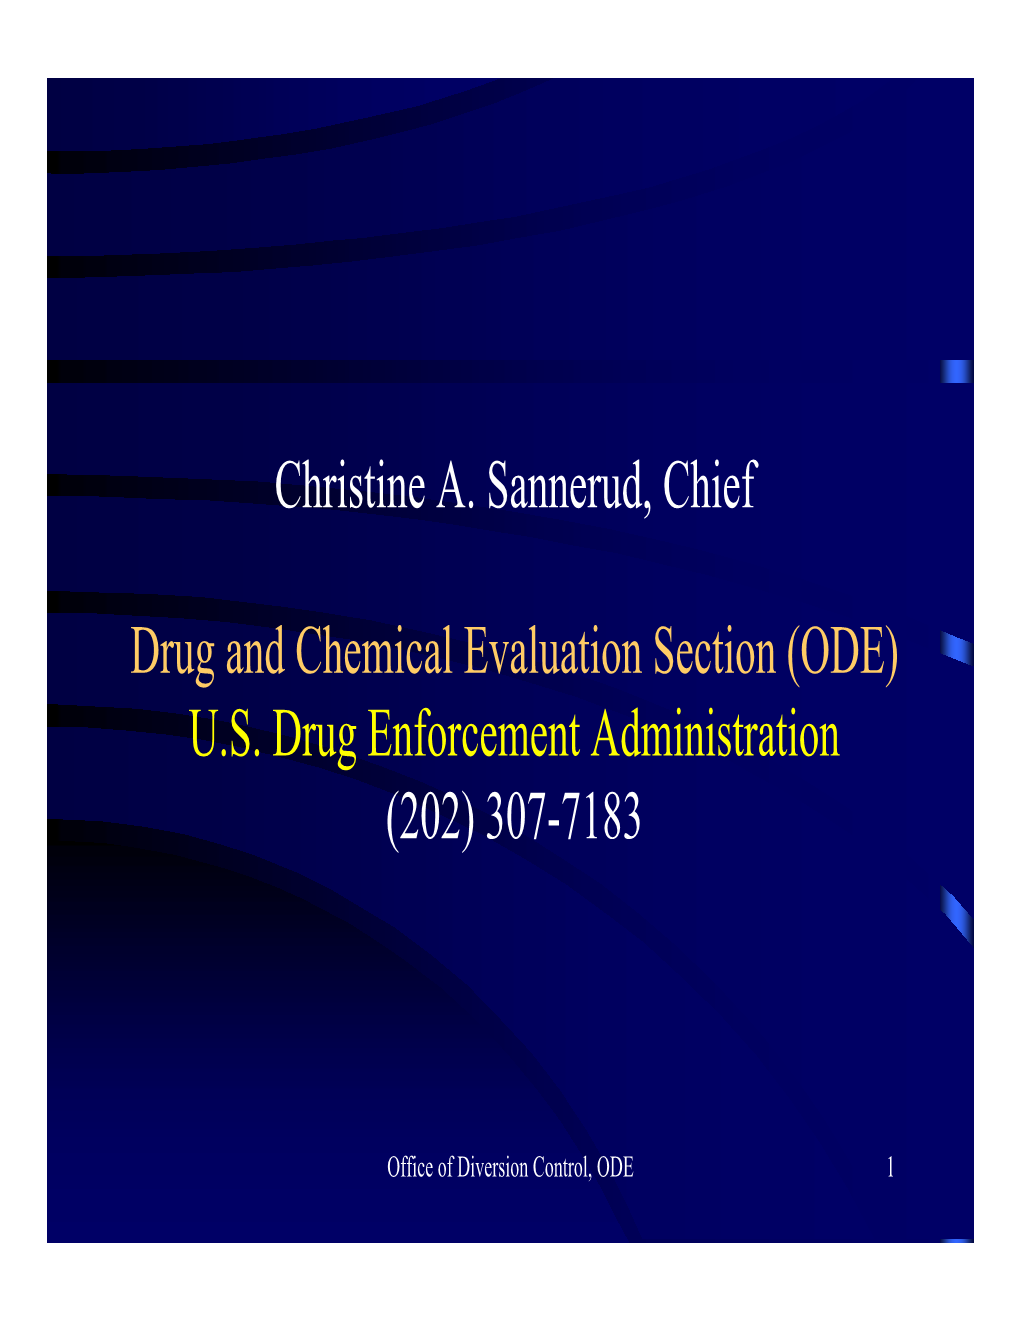 DEA Regulated Chemical Initiatives